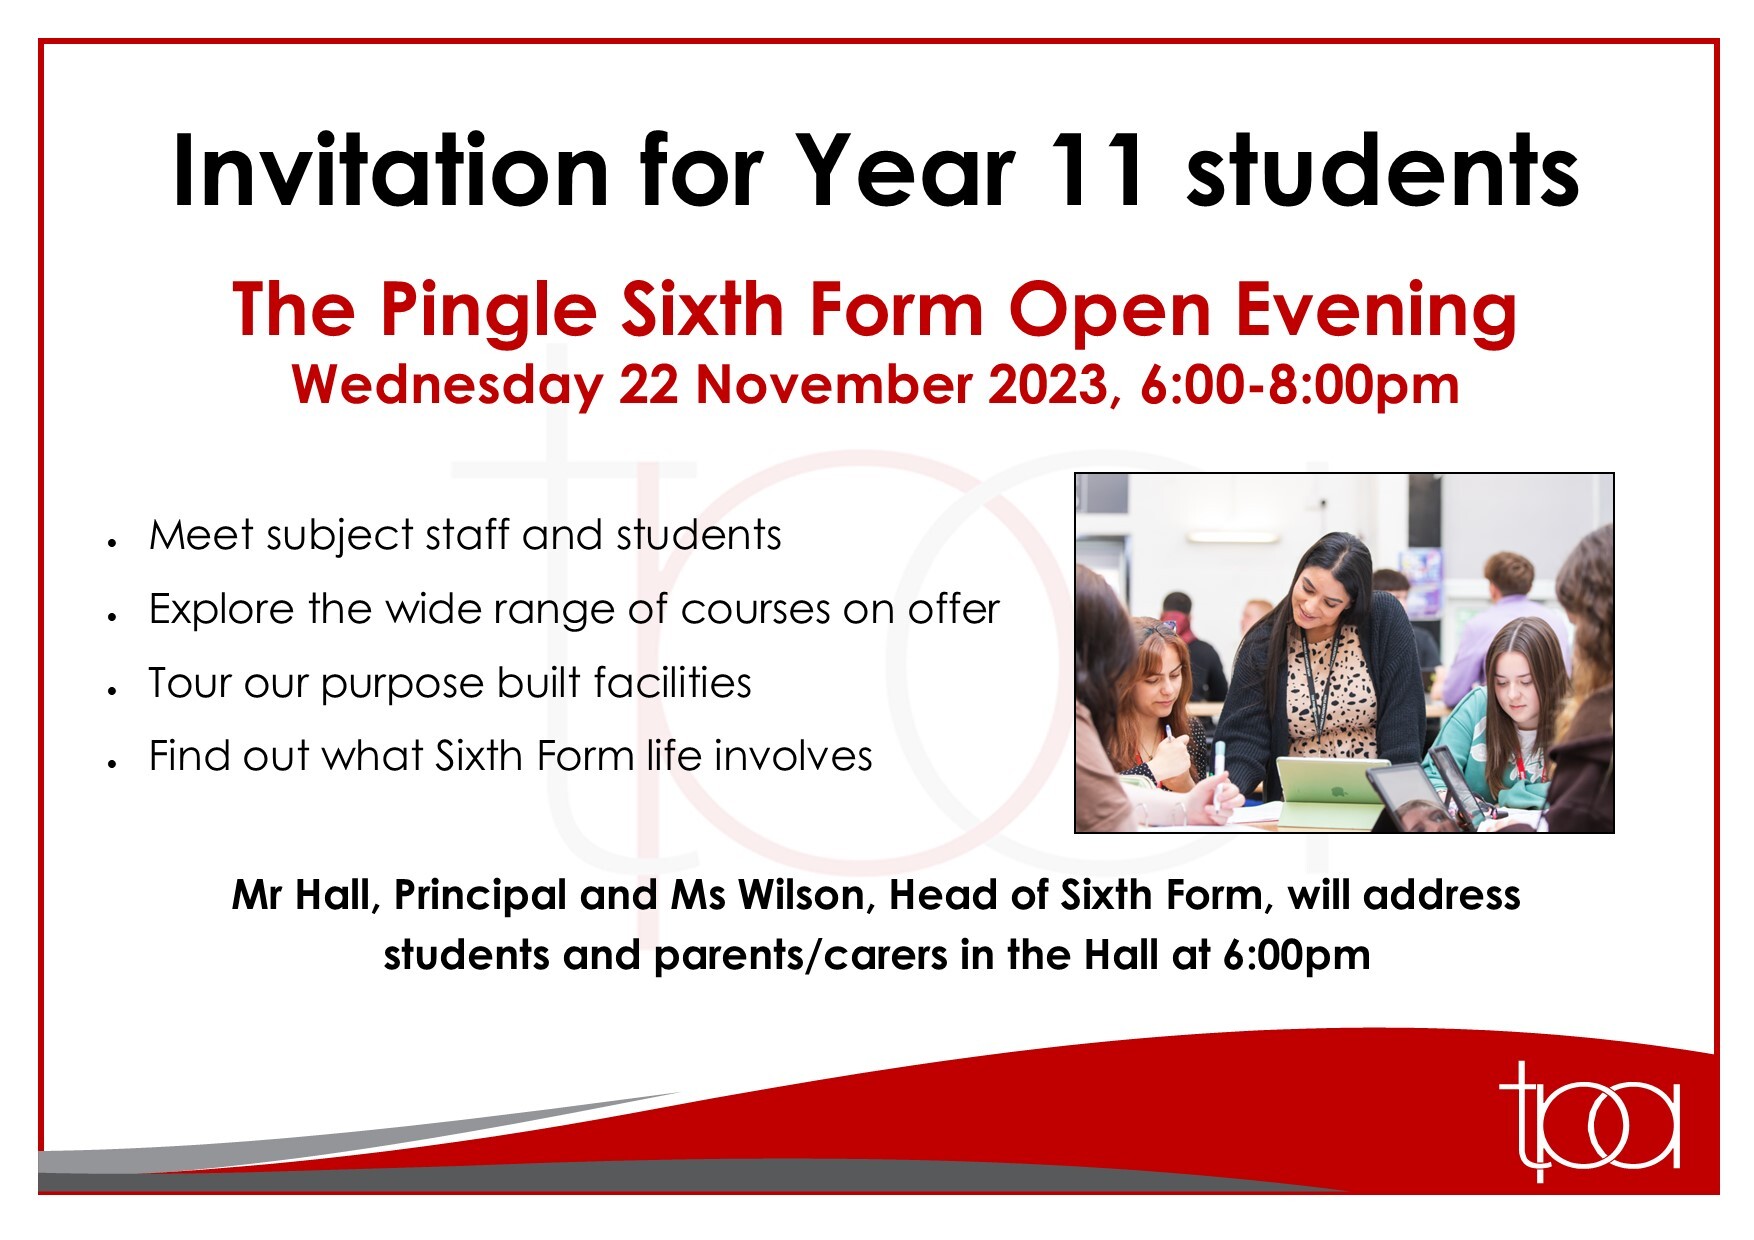 Pingle sixth form open evening invitation 2023